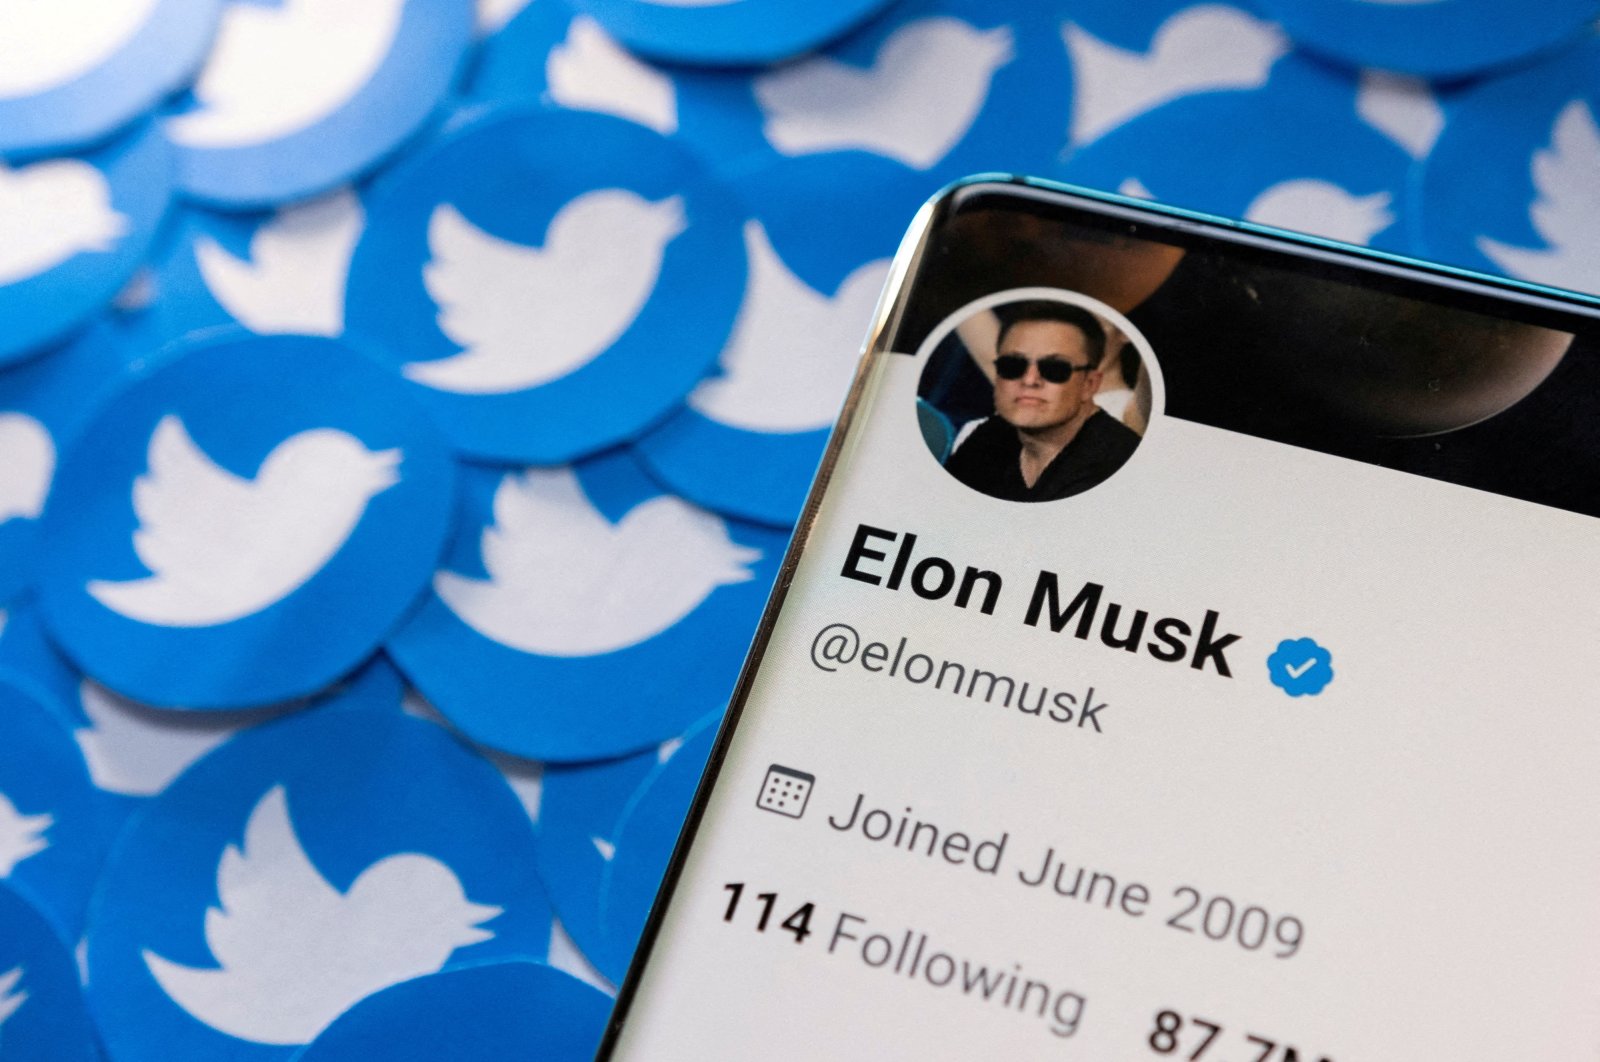 Elon Musk ke Twitter: Buktikan akun spam kurang dari 5% atau tidak ada kesepakatan